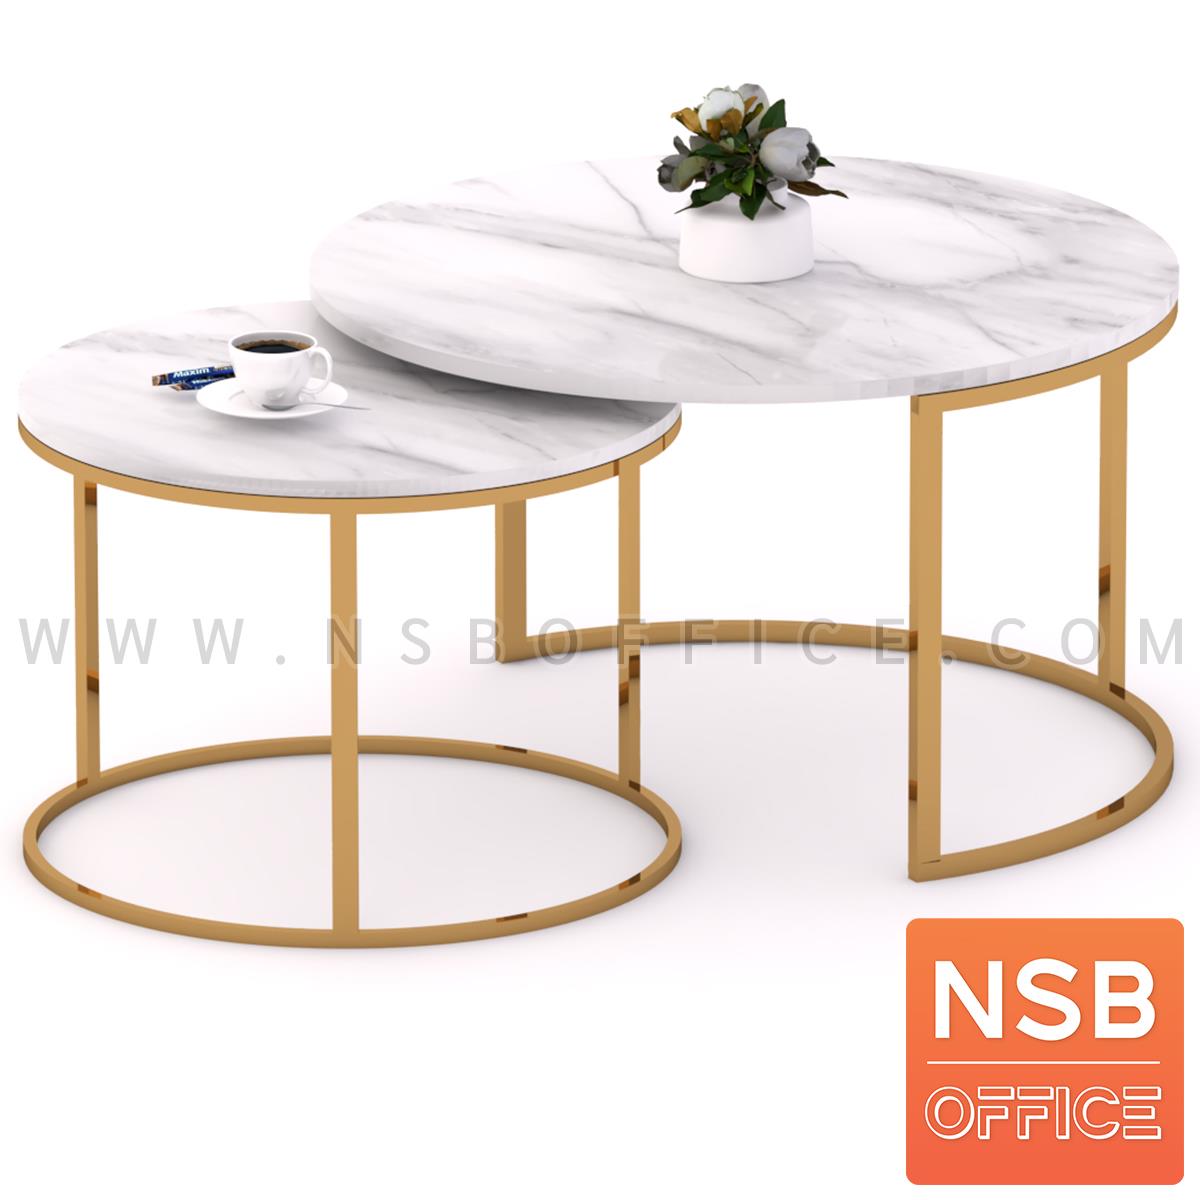 B13A303:โต๊ะกลางหินอ่อนสีขาว รุ่น Lightfine (ไลท์ไฟน์)   ขาสแตนเลสชุบทอง